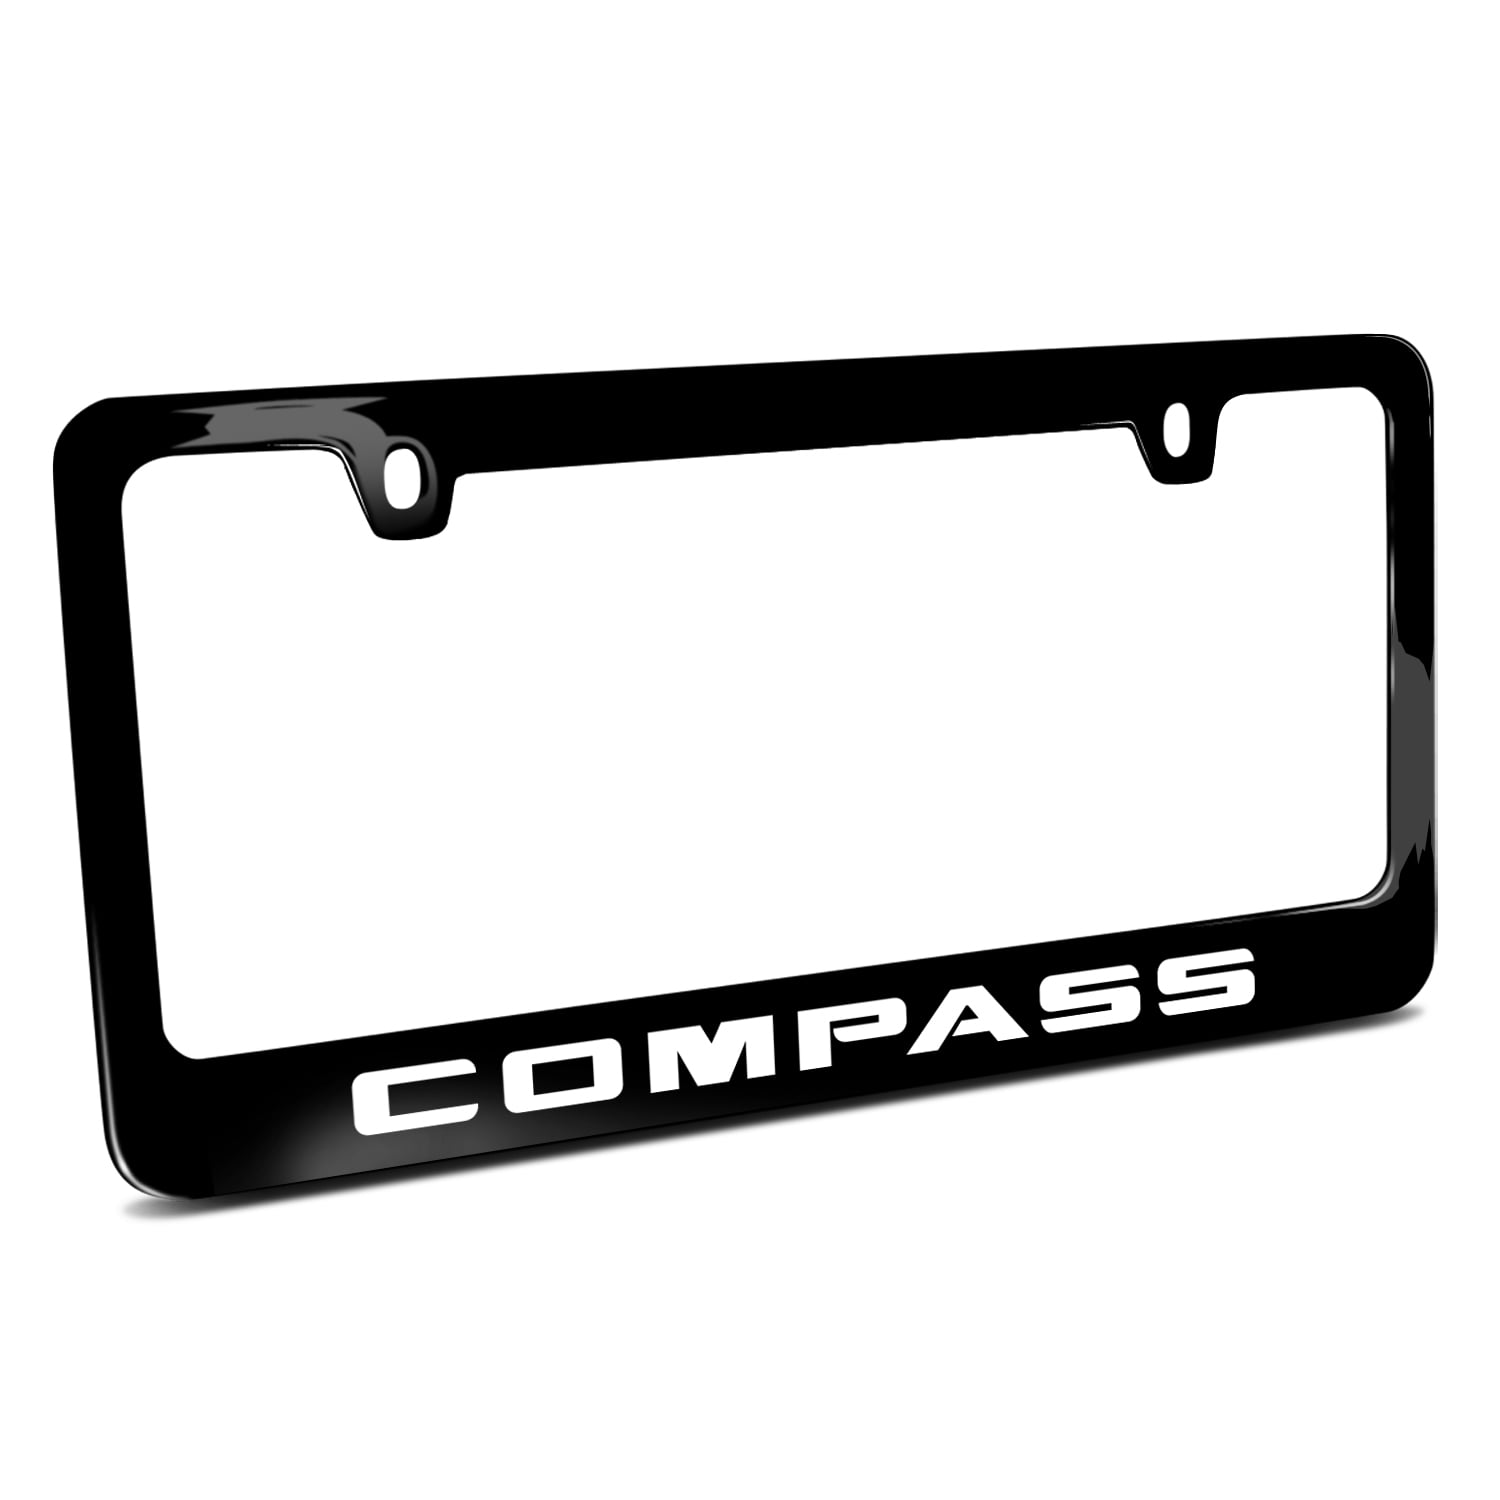 Jeep Compass Black Metal License Plate Frame - Walmart.com